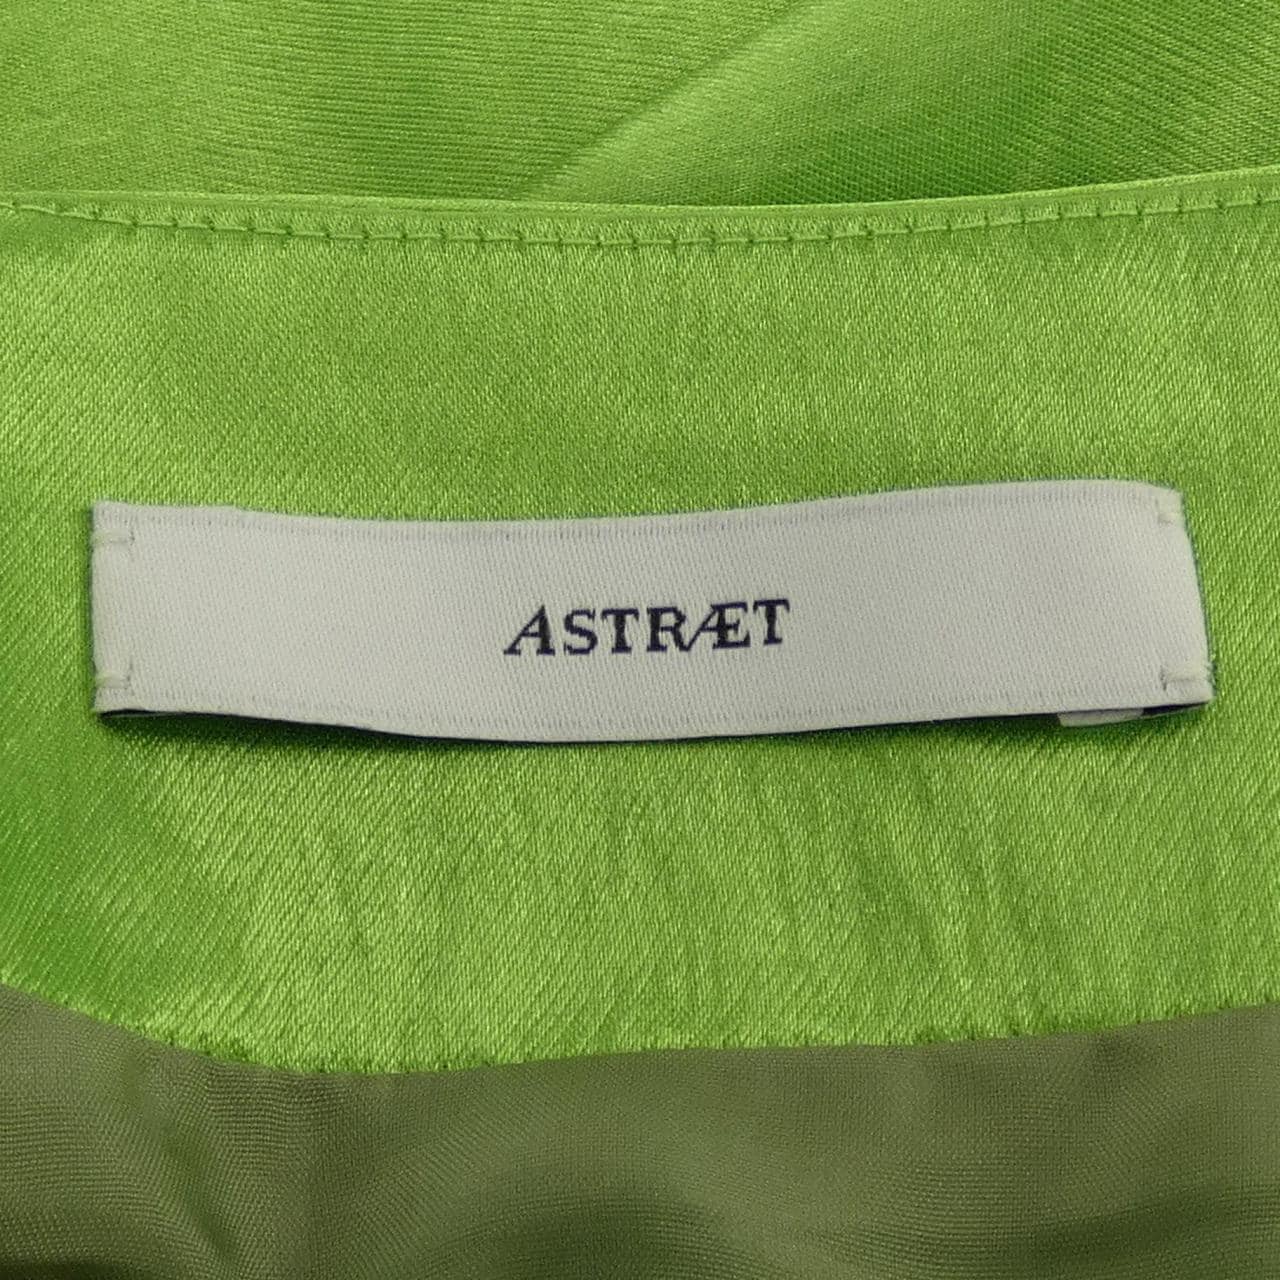 Astrat ASTRAET裙